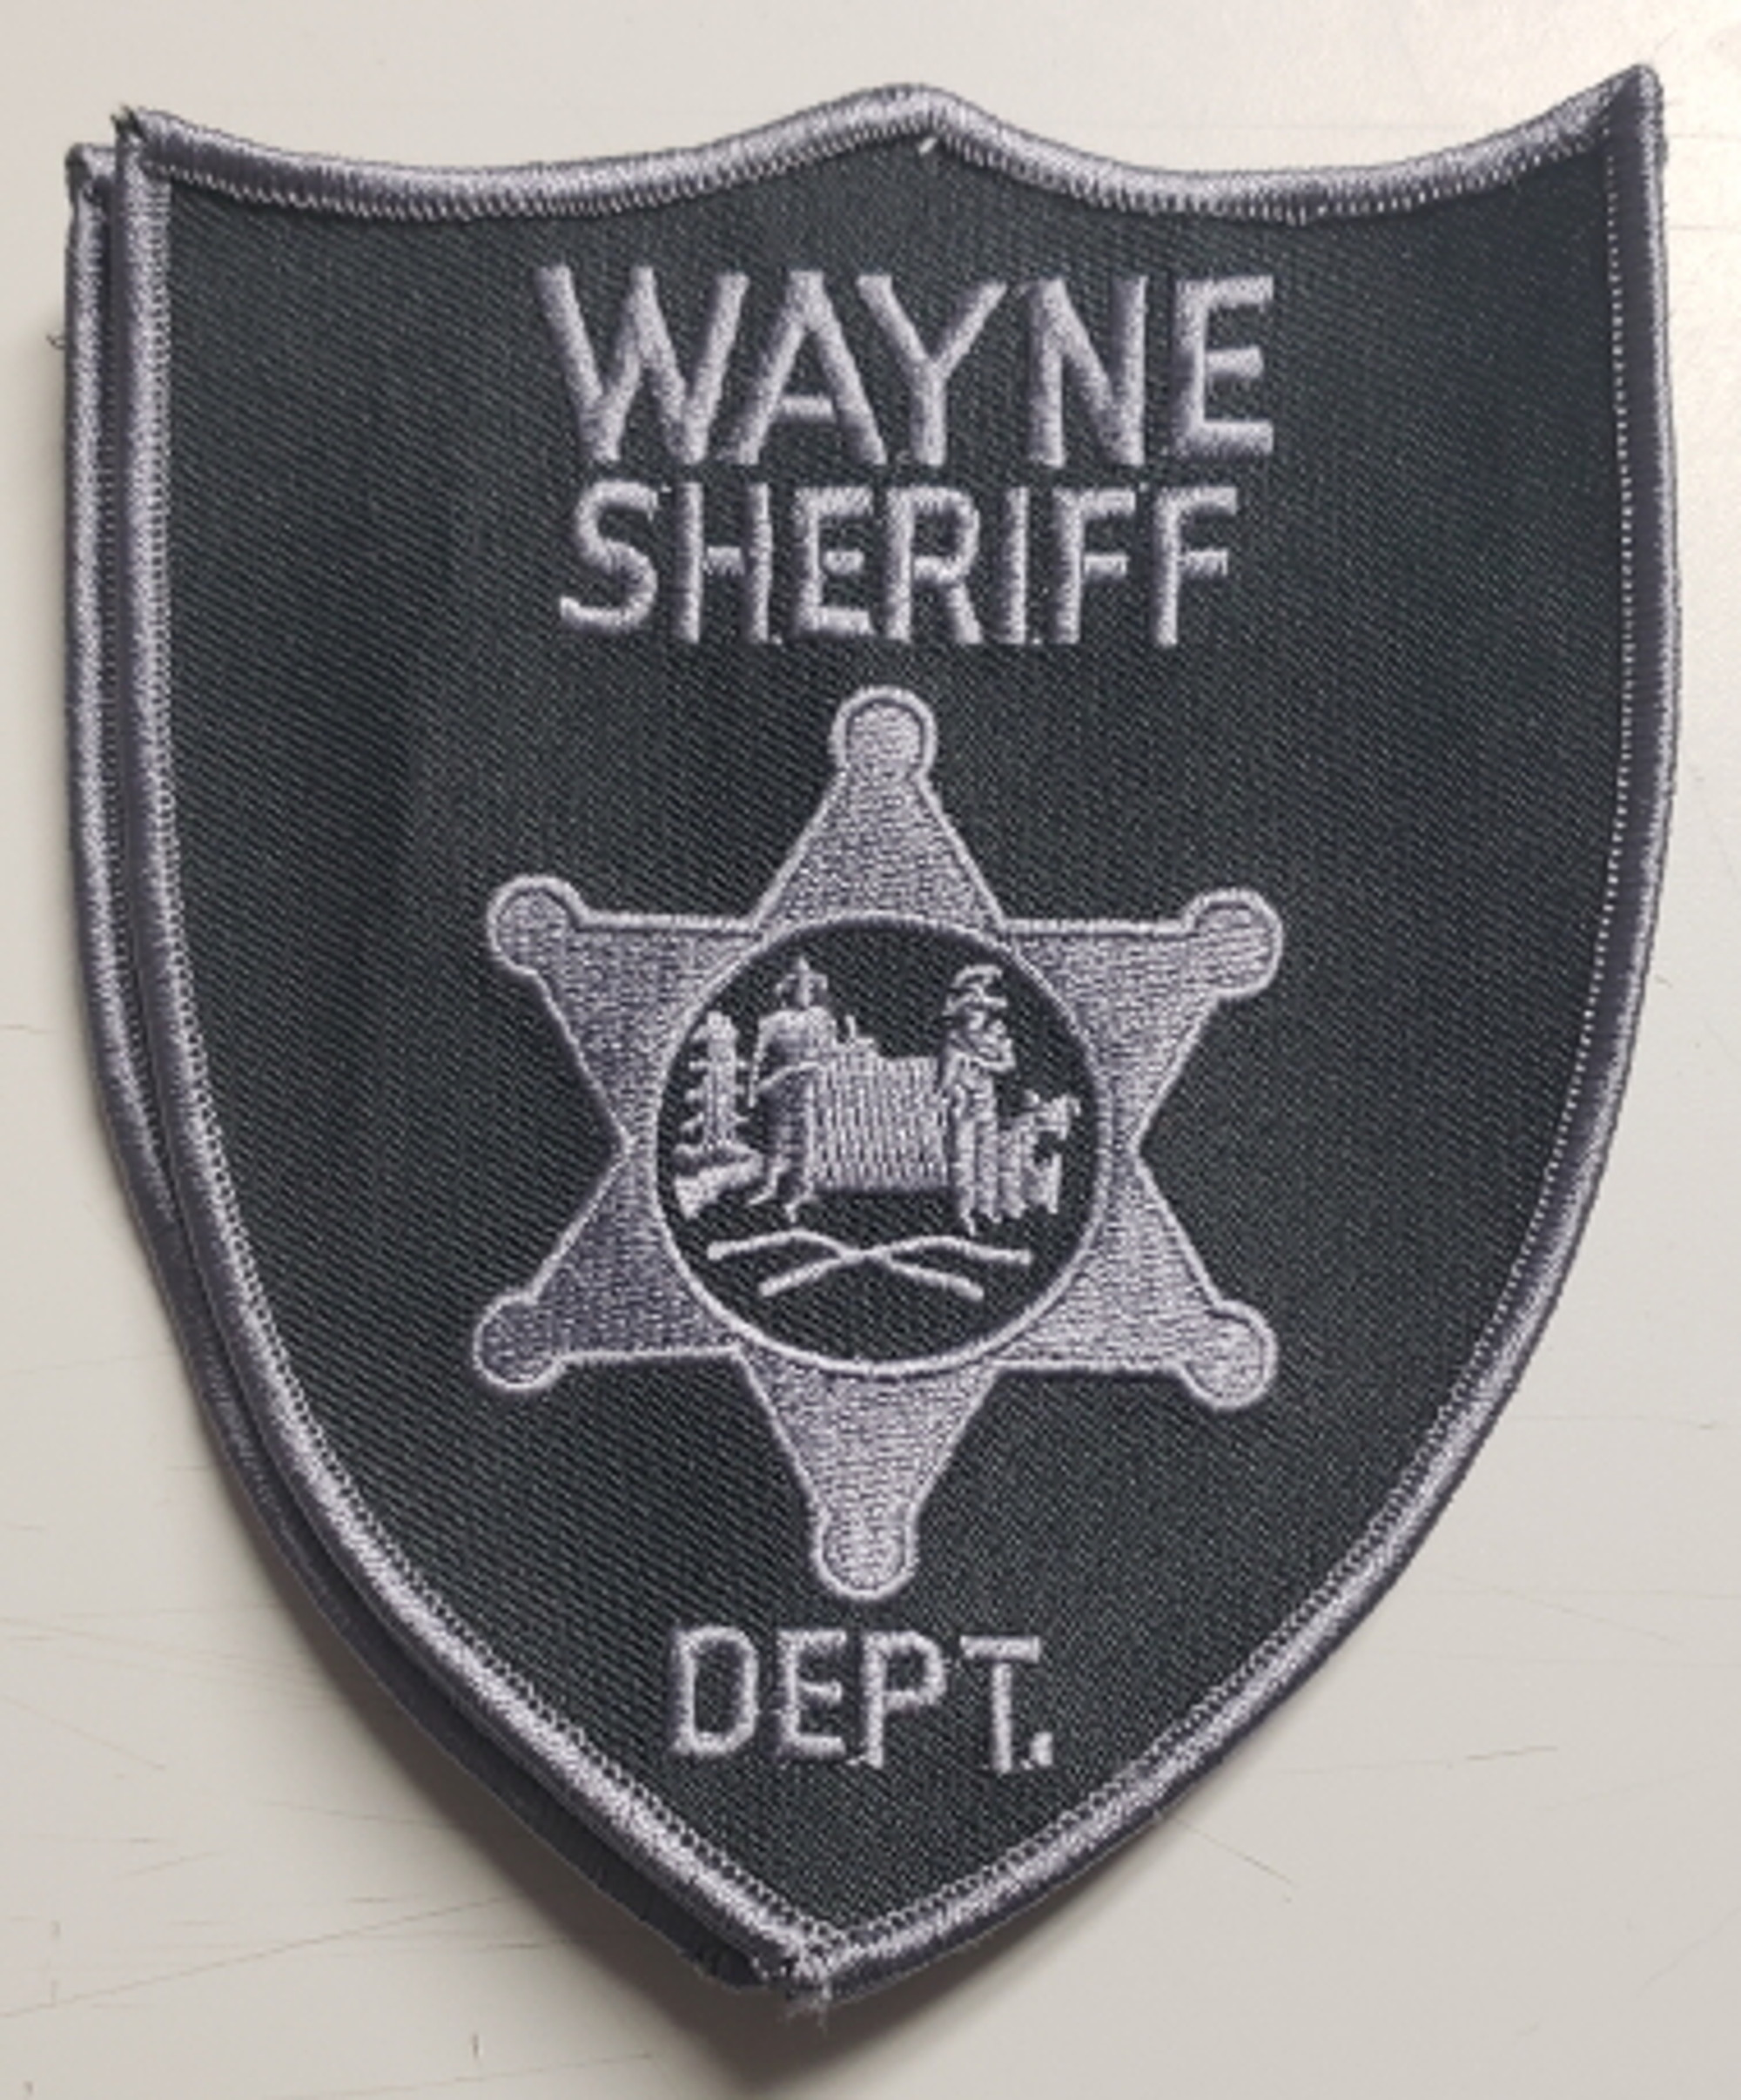 Wayne Sheriff Dept. WV Police Patch